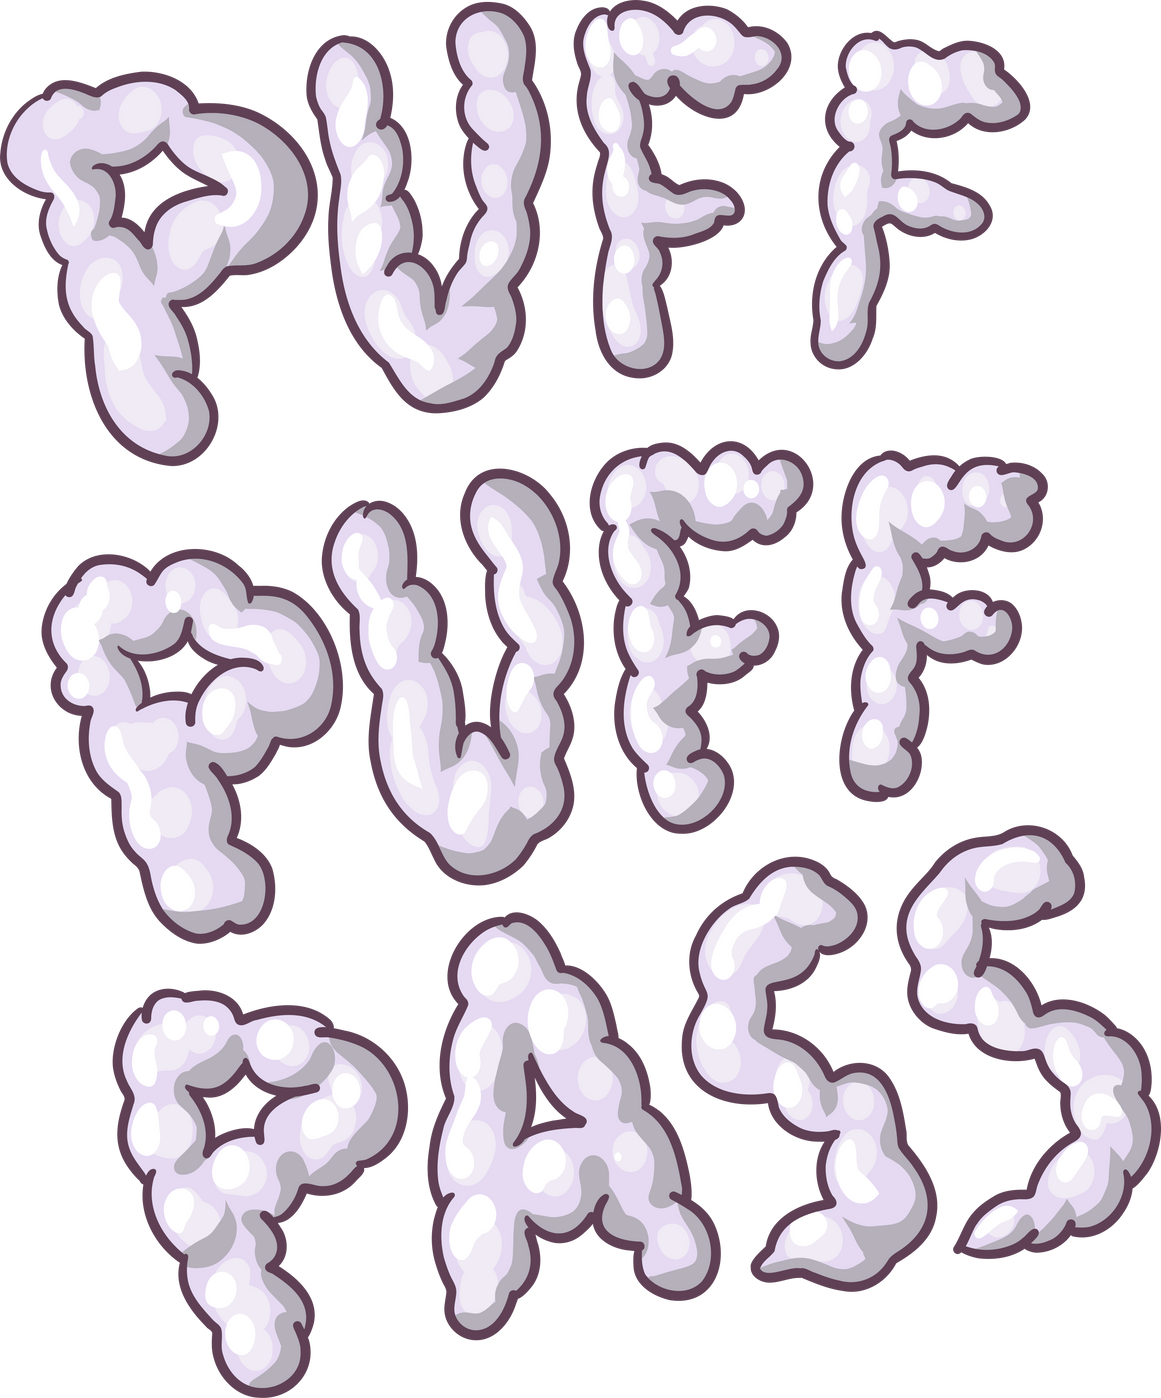 Puff puff pass. a phrase about smoking weed. marijuana and cannabis